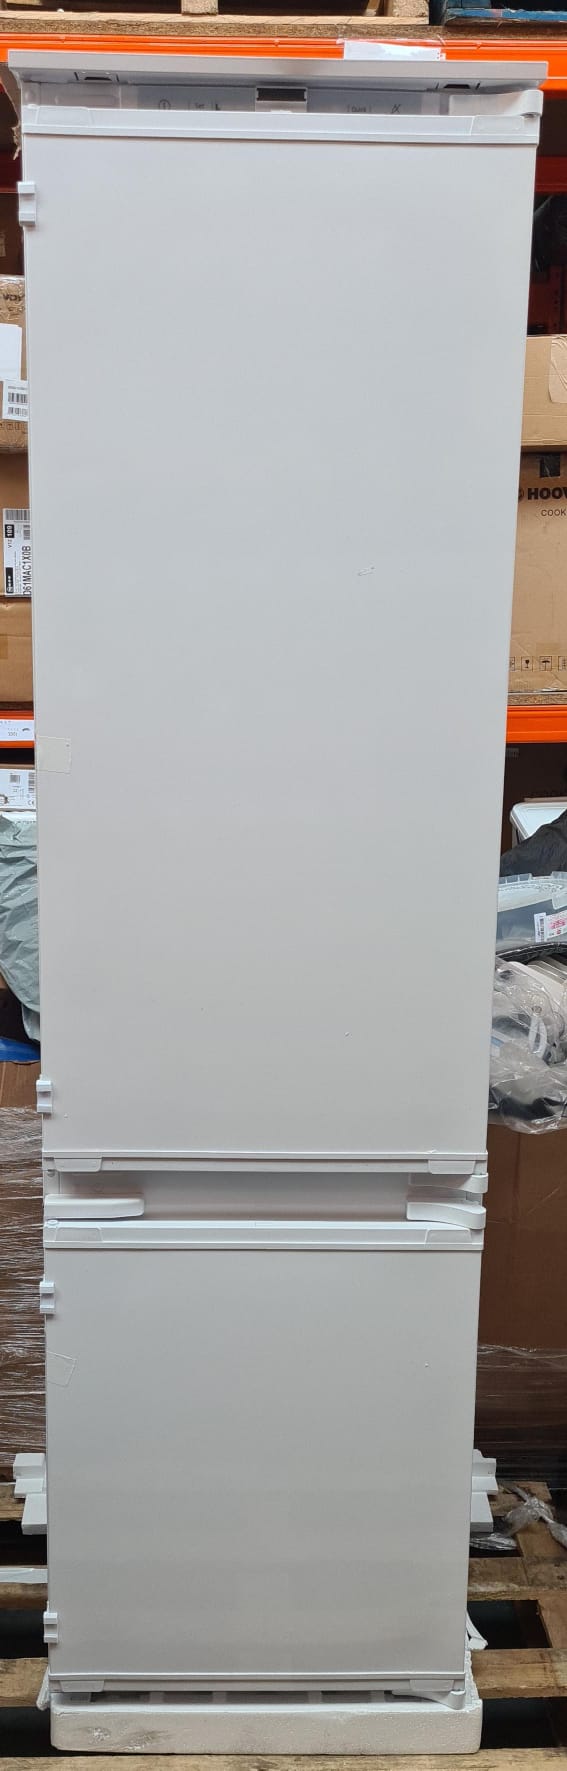 Beko-Fridge freezer-70:30 Integrated Frost free-White-BCFDV3973-5919